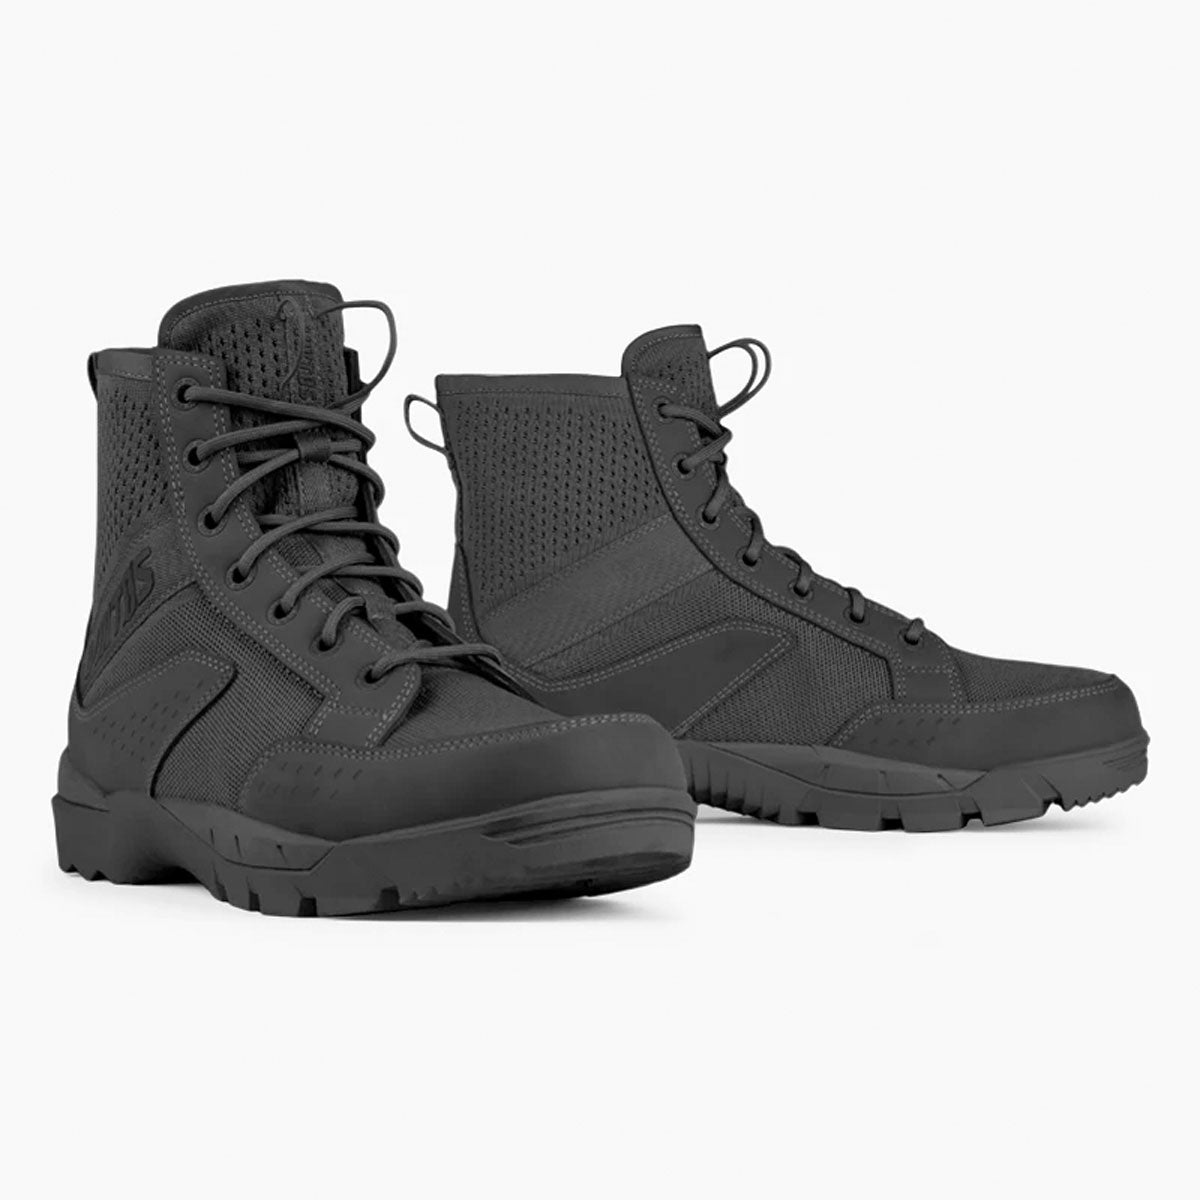 VIKTOS Johnny Combat Vented Boot Nightfjall Footwear VIKTOS 6 Tactical Gear Supplier Tactical Distributors Australia